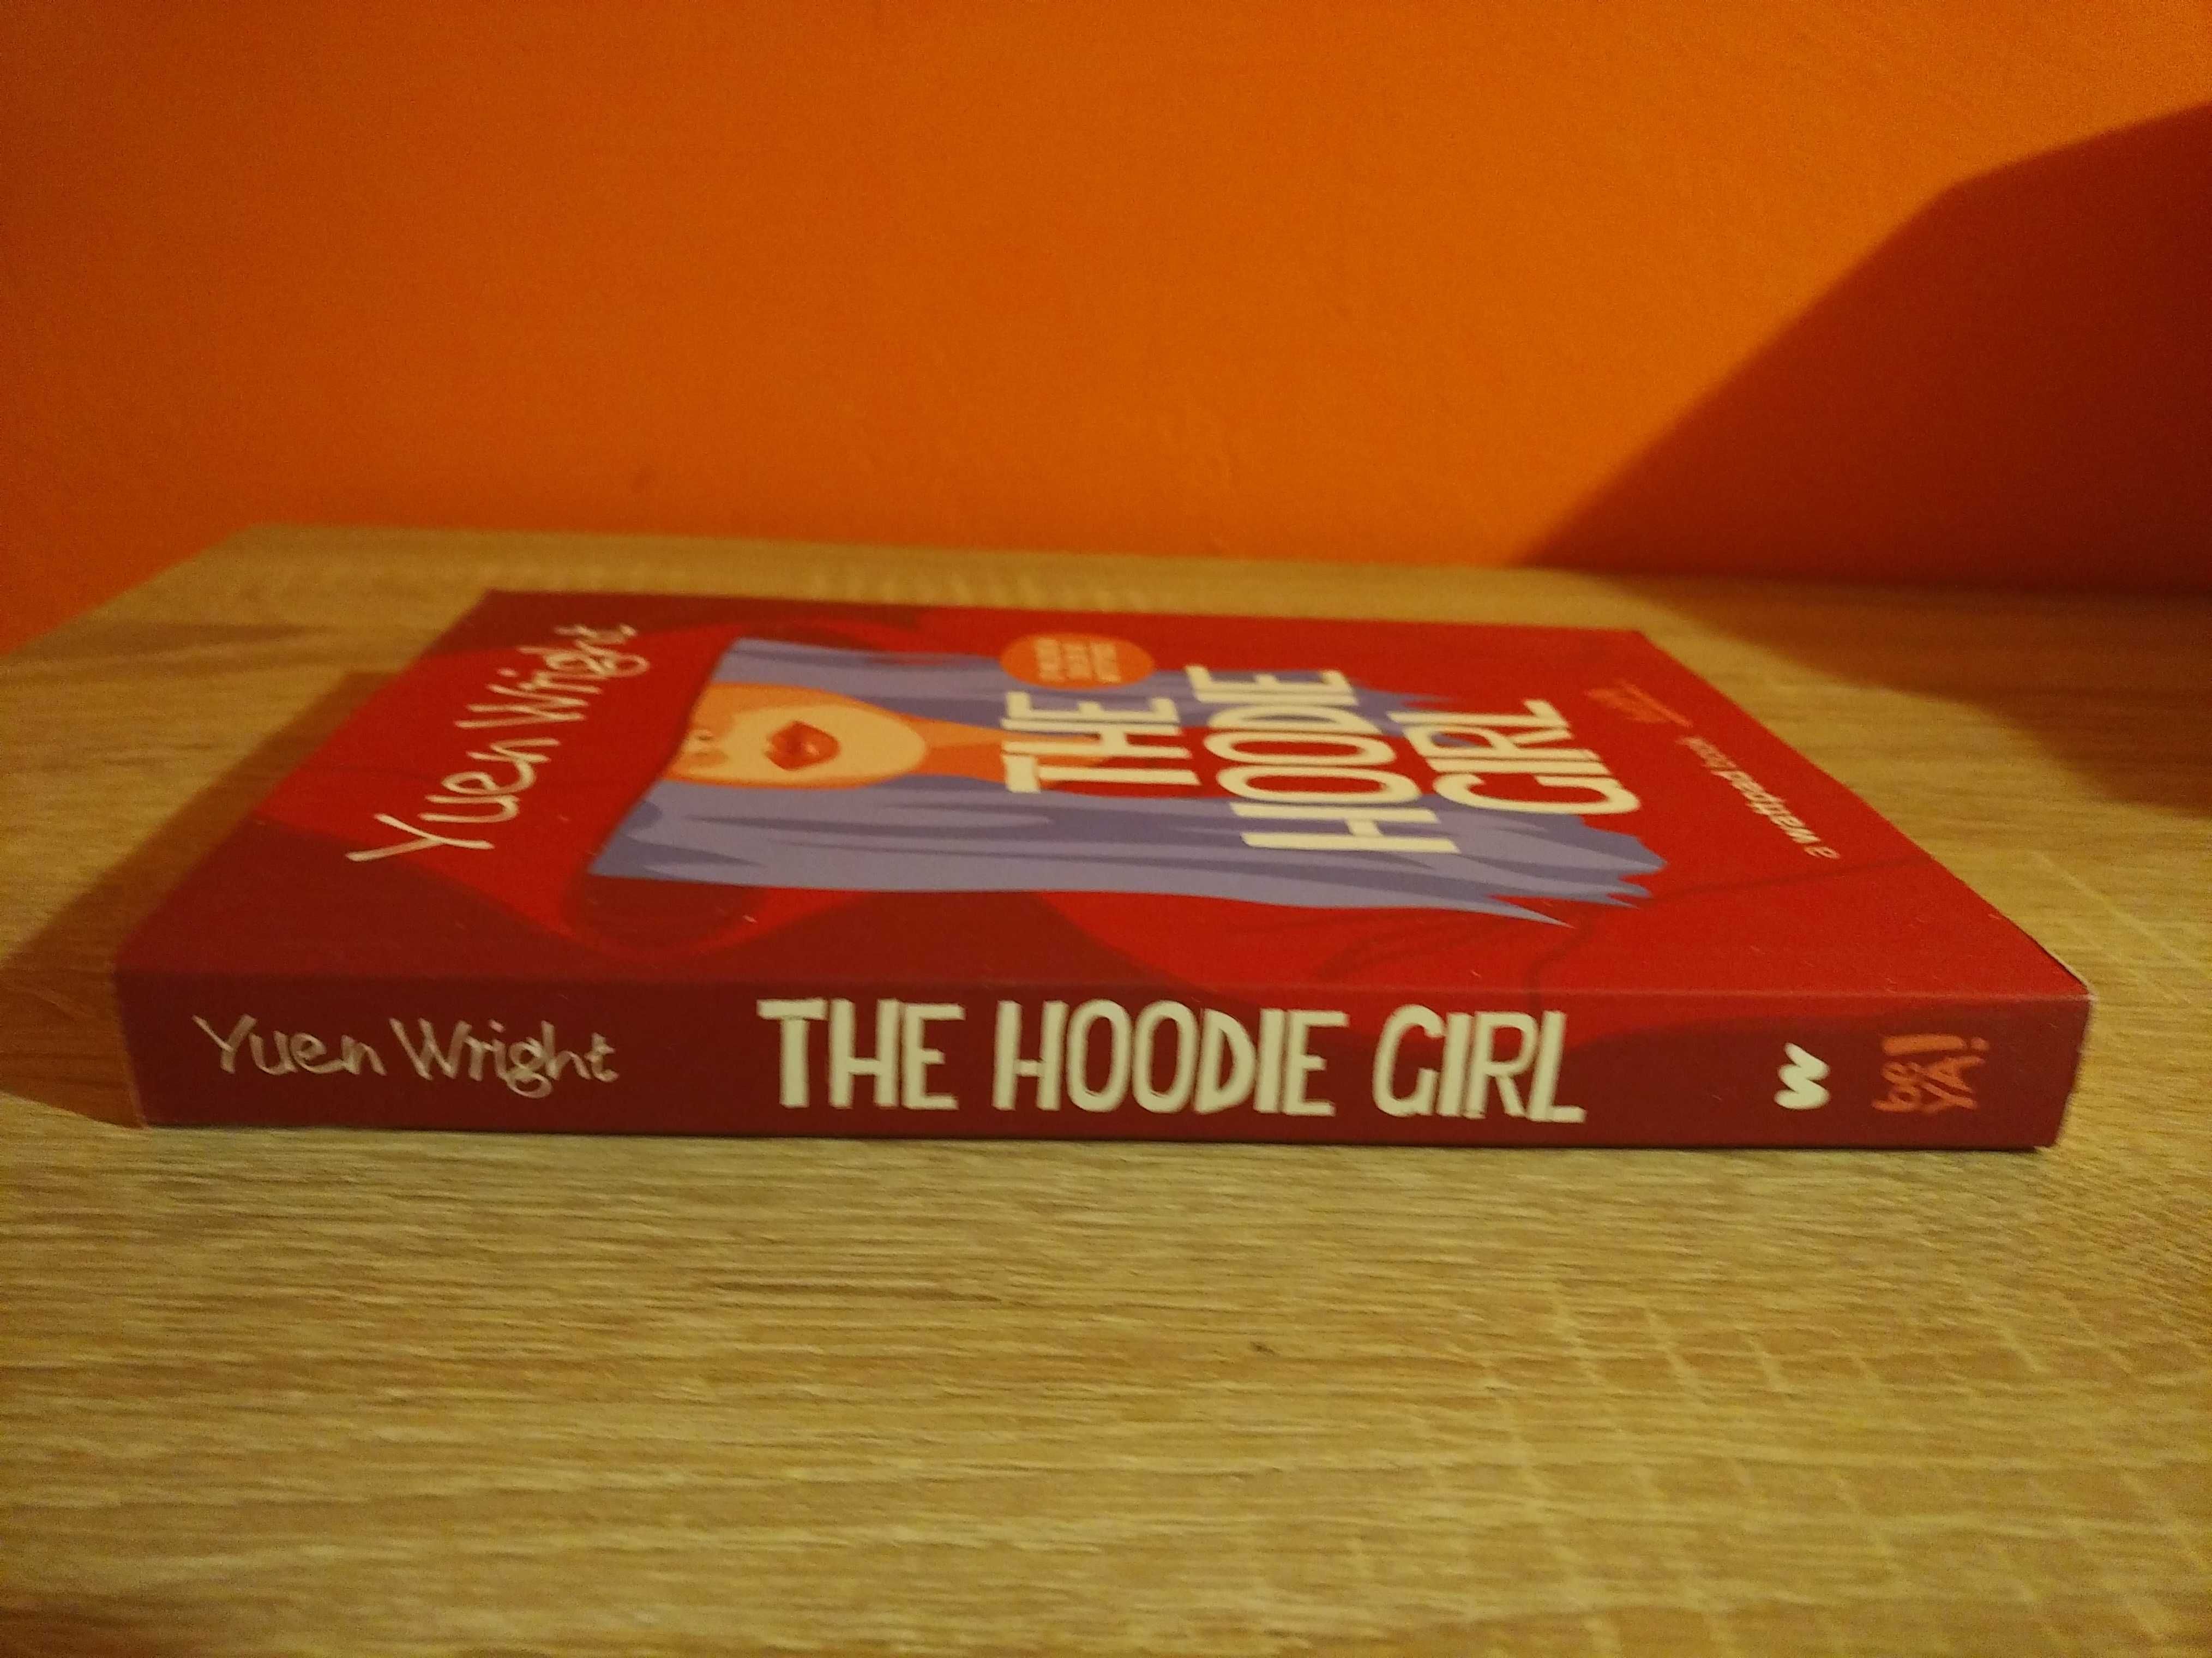 The Hoodie Girl Yuen Wright